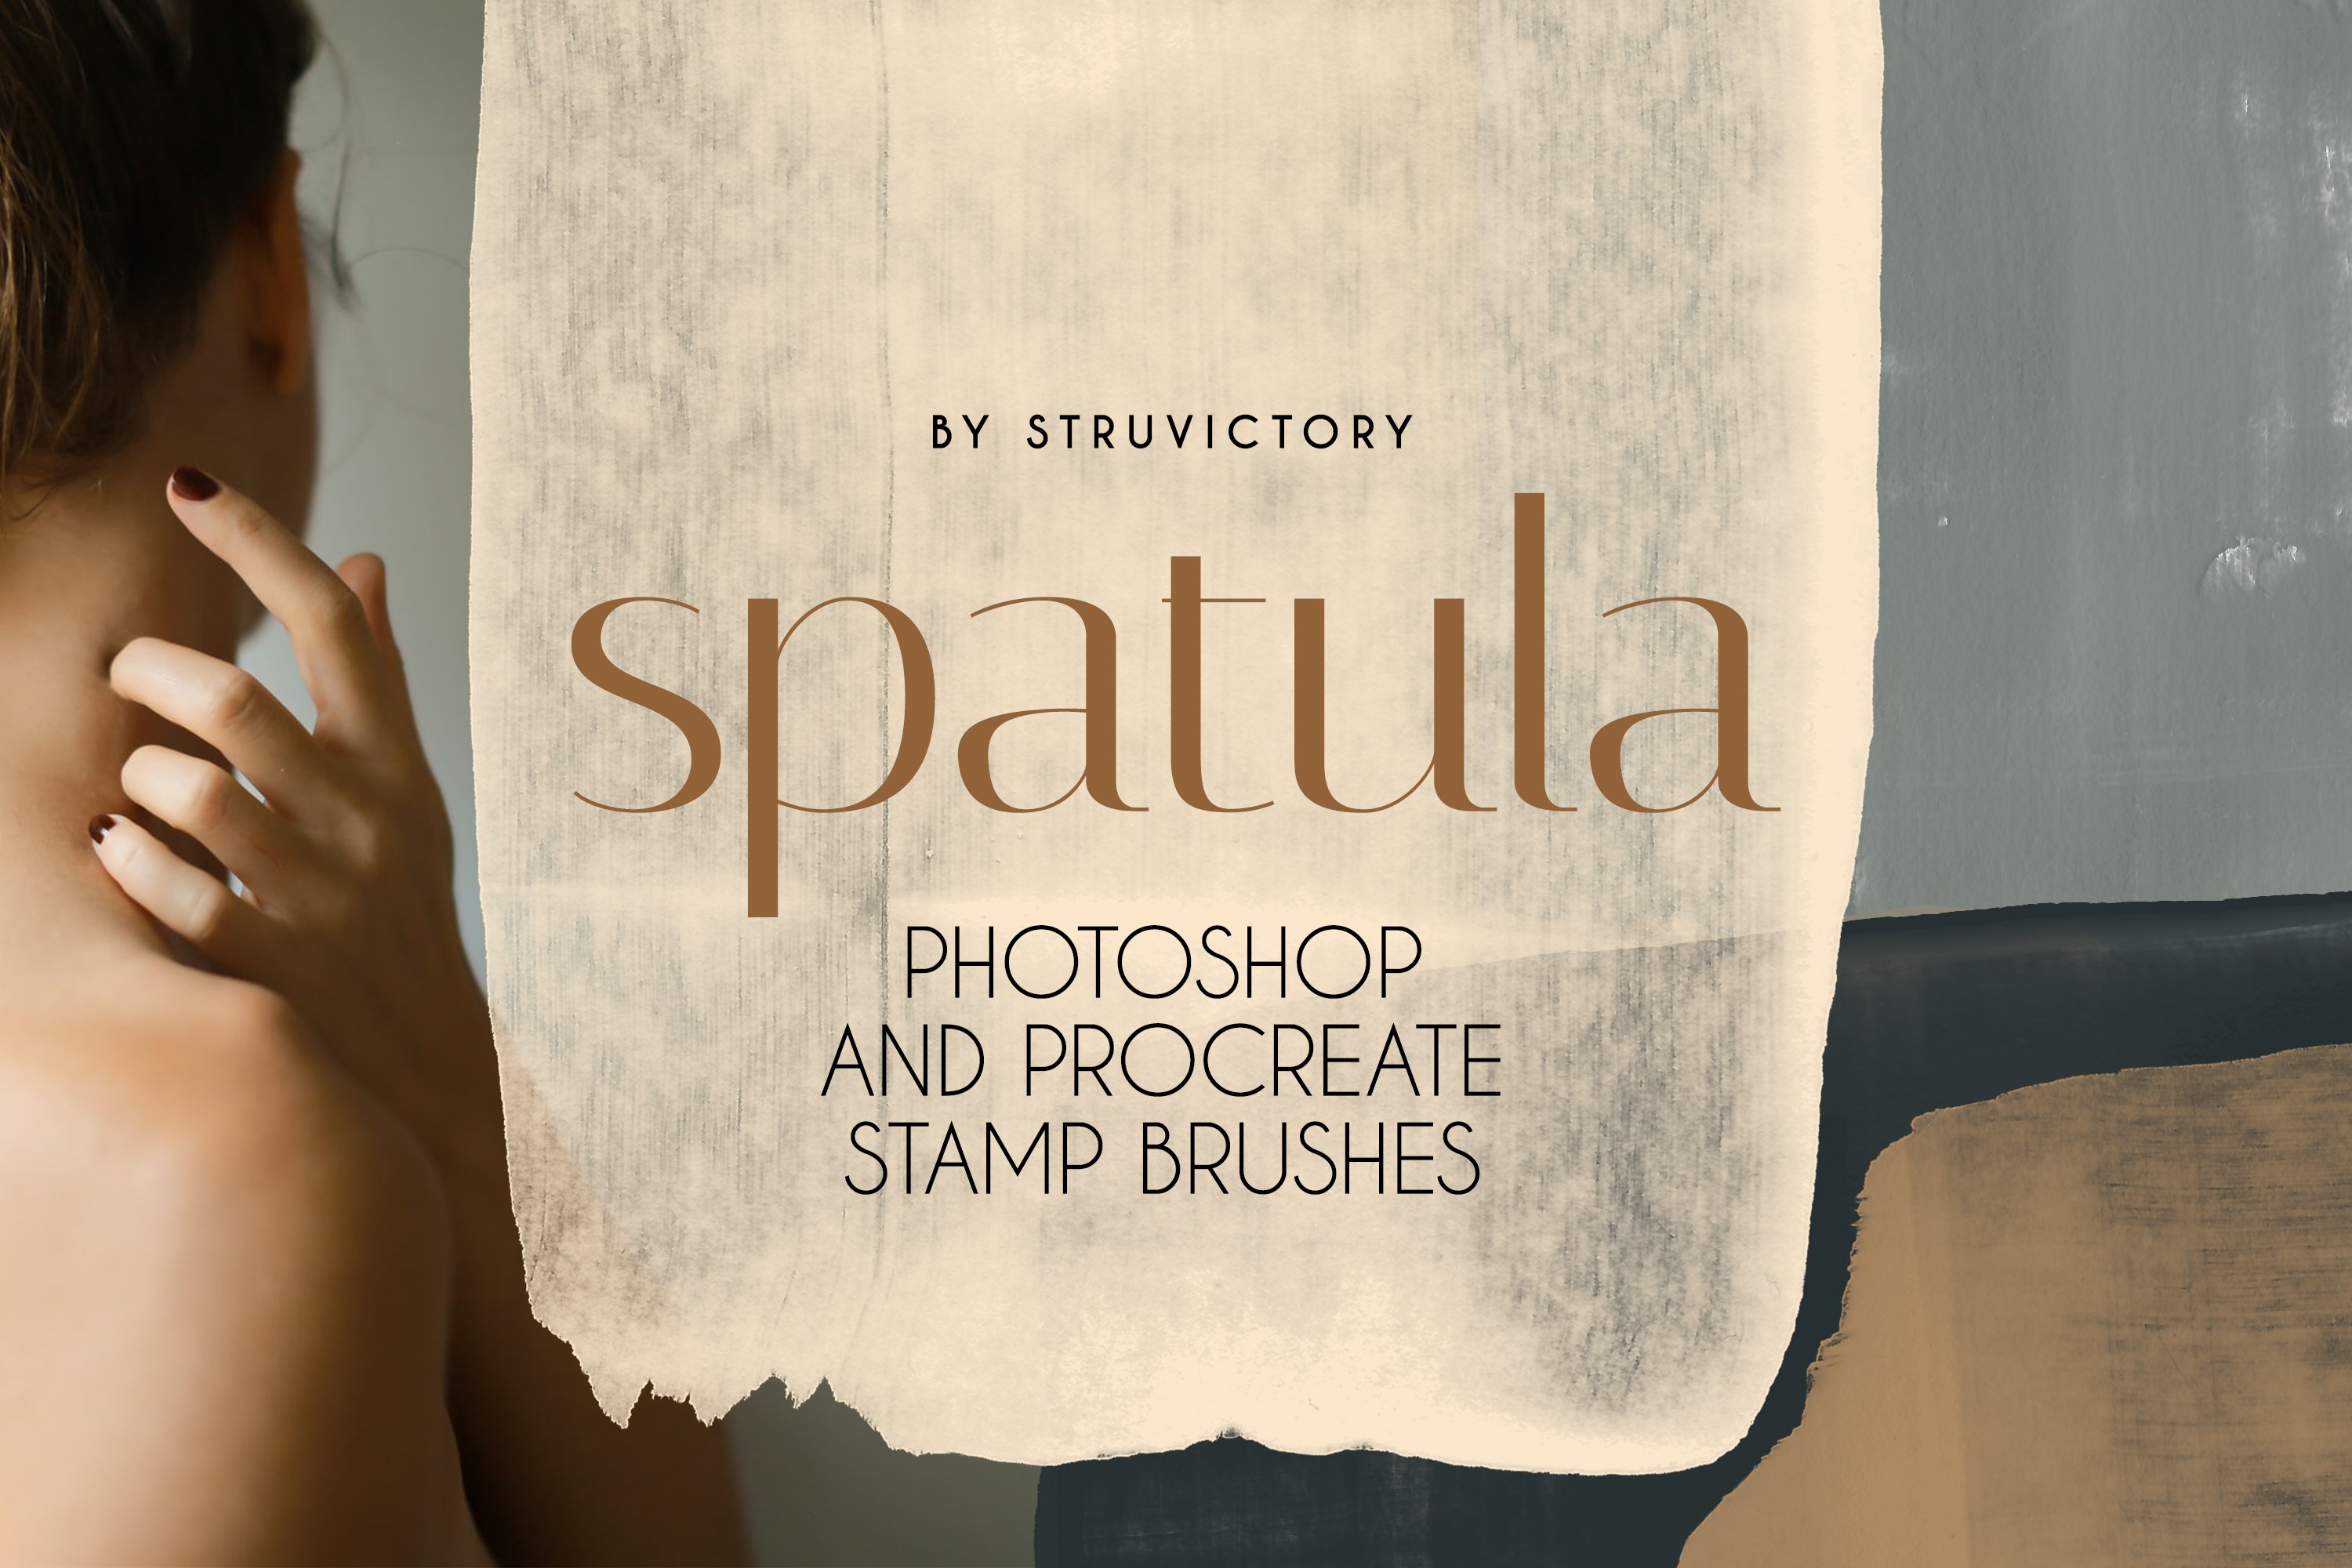 Spatula PS & Procreate Stamp Brushescover image.